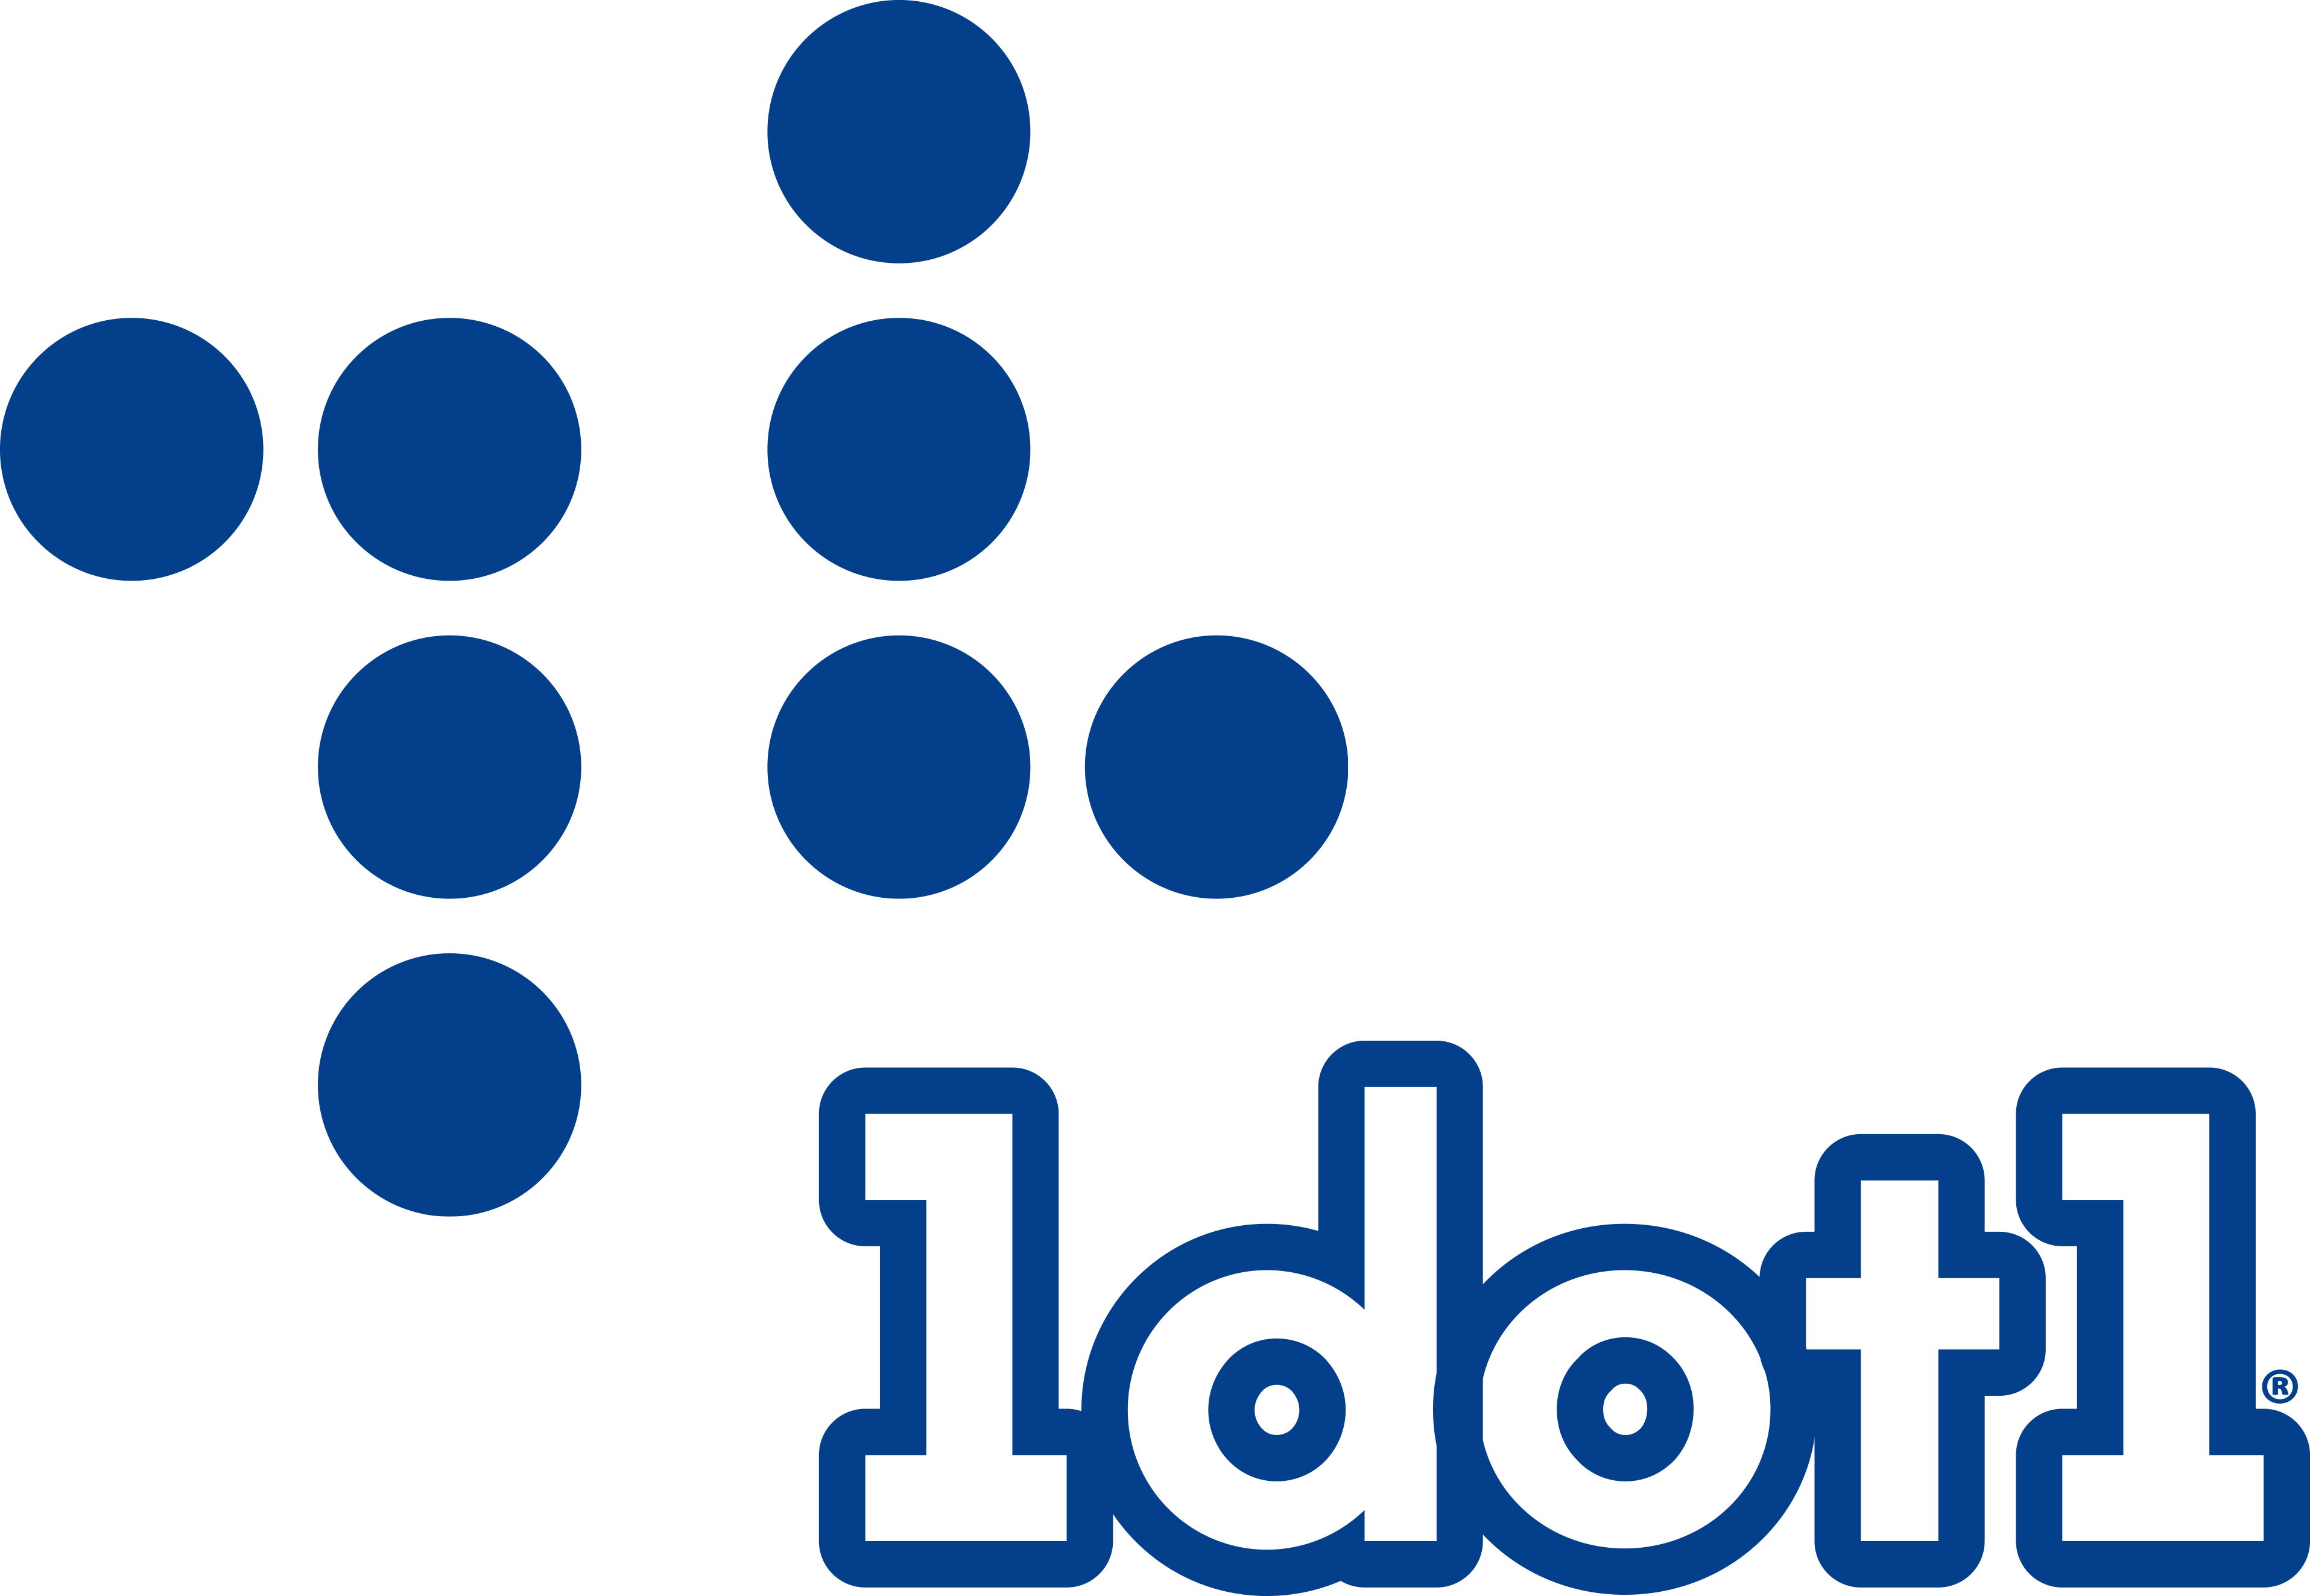 1dot1 logo with Trademark 